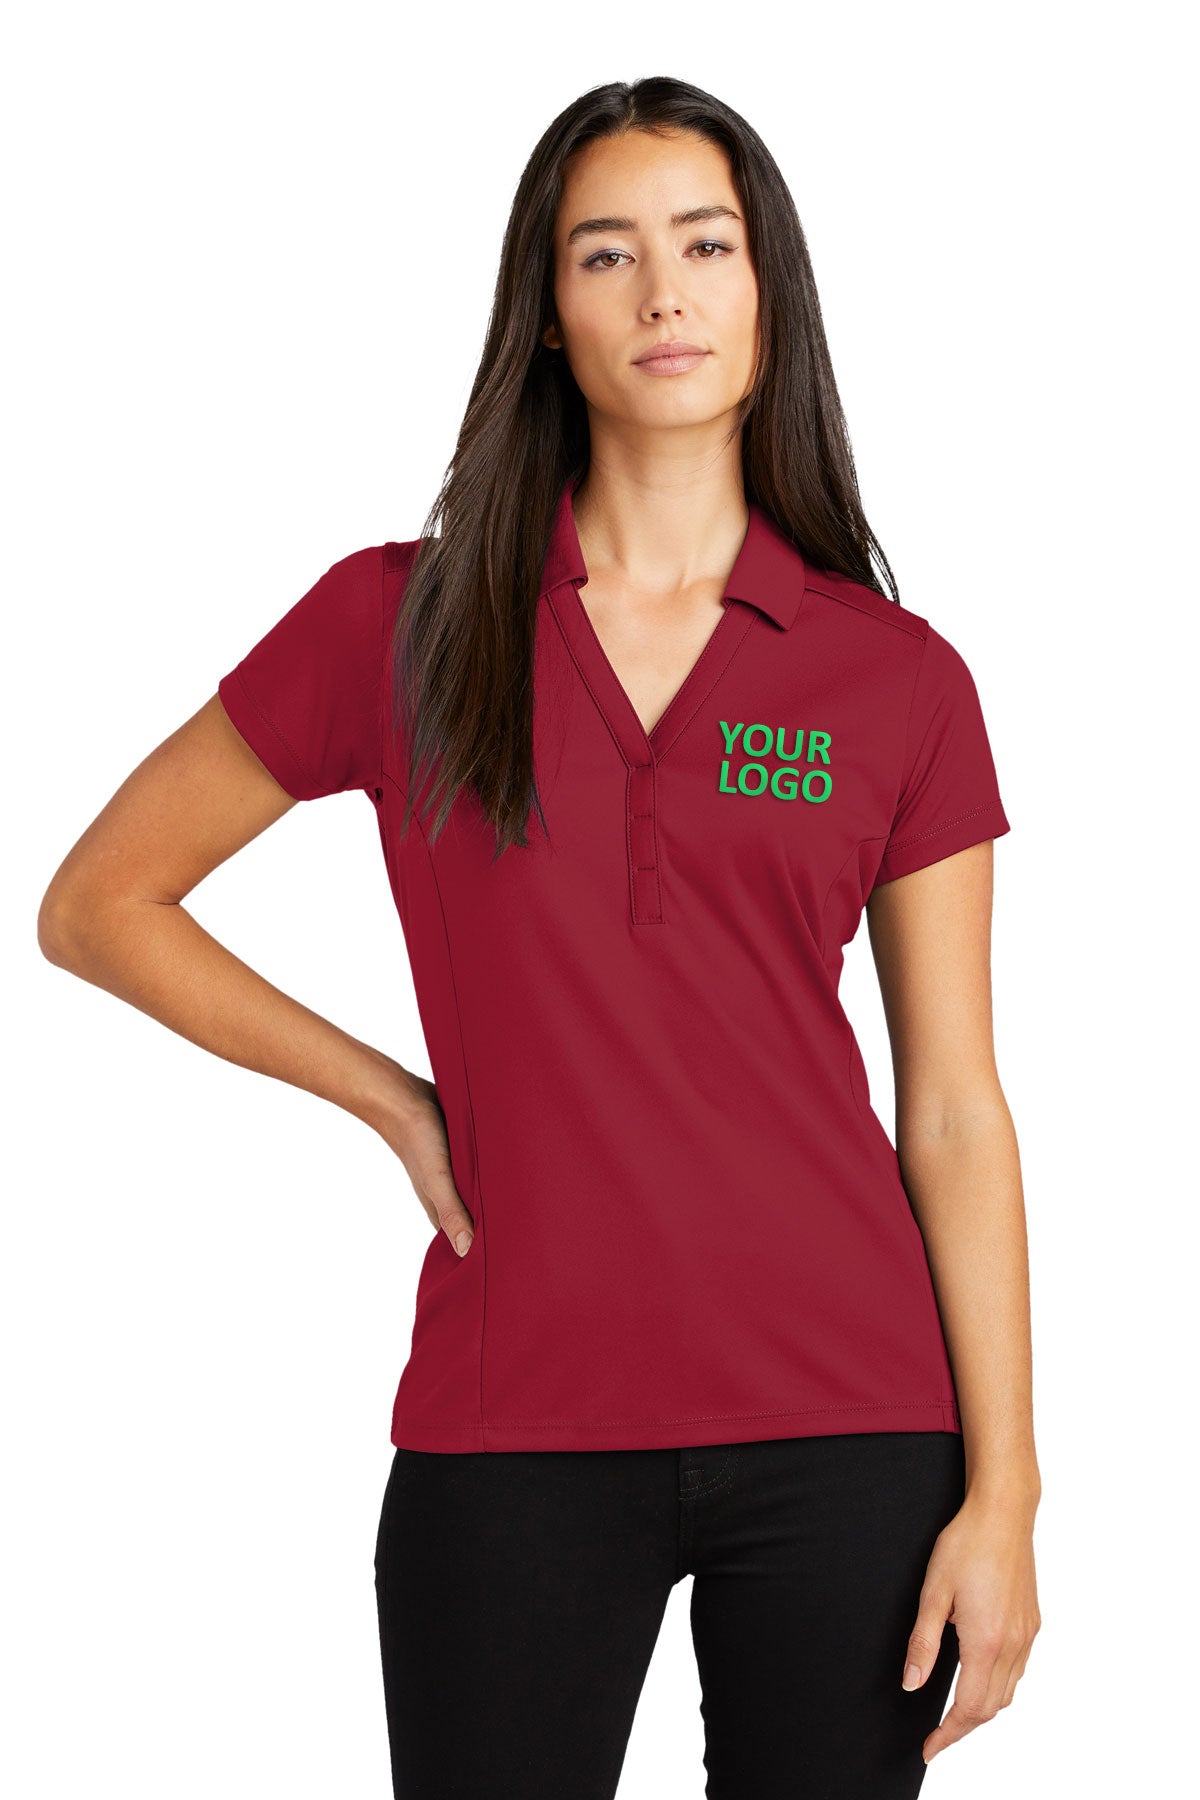 OGIO Signal Red LOG125 polo work shirts with company logo